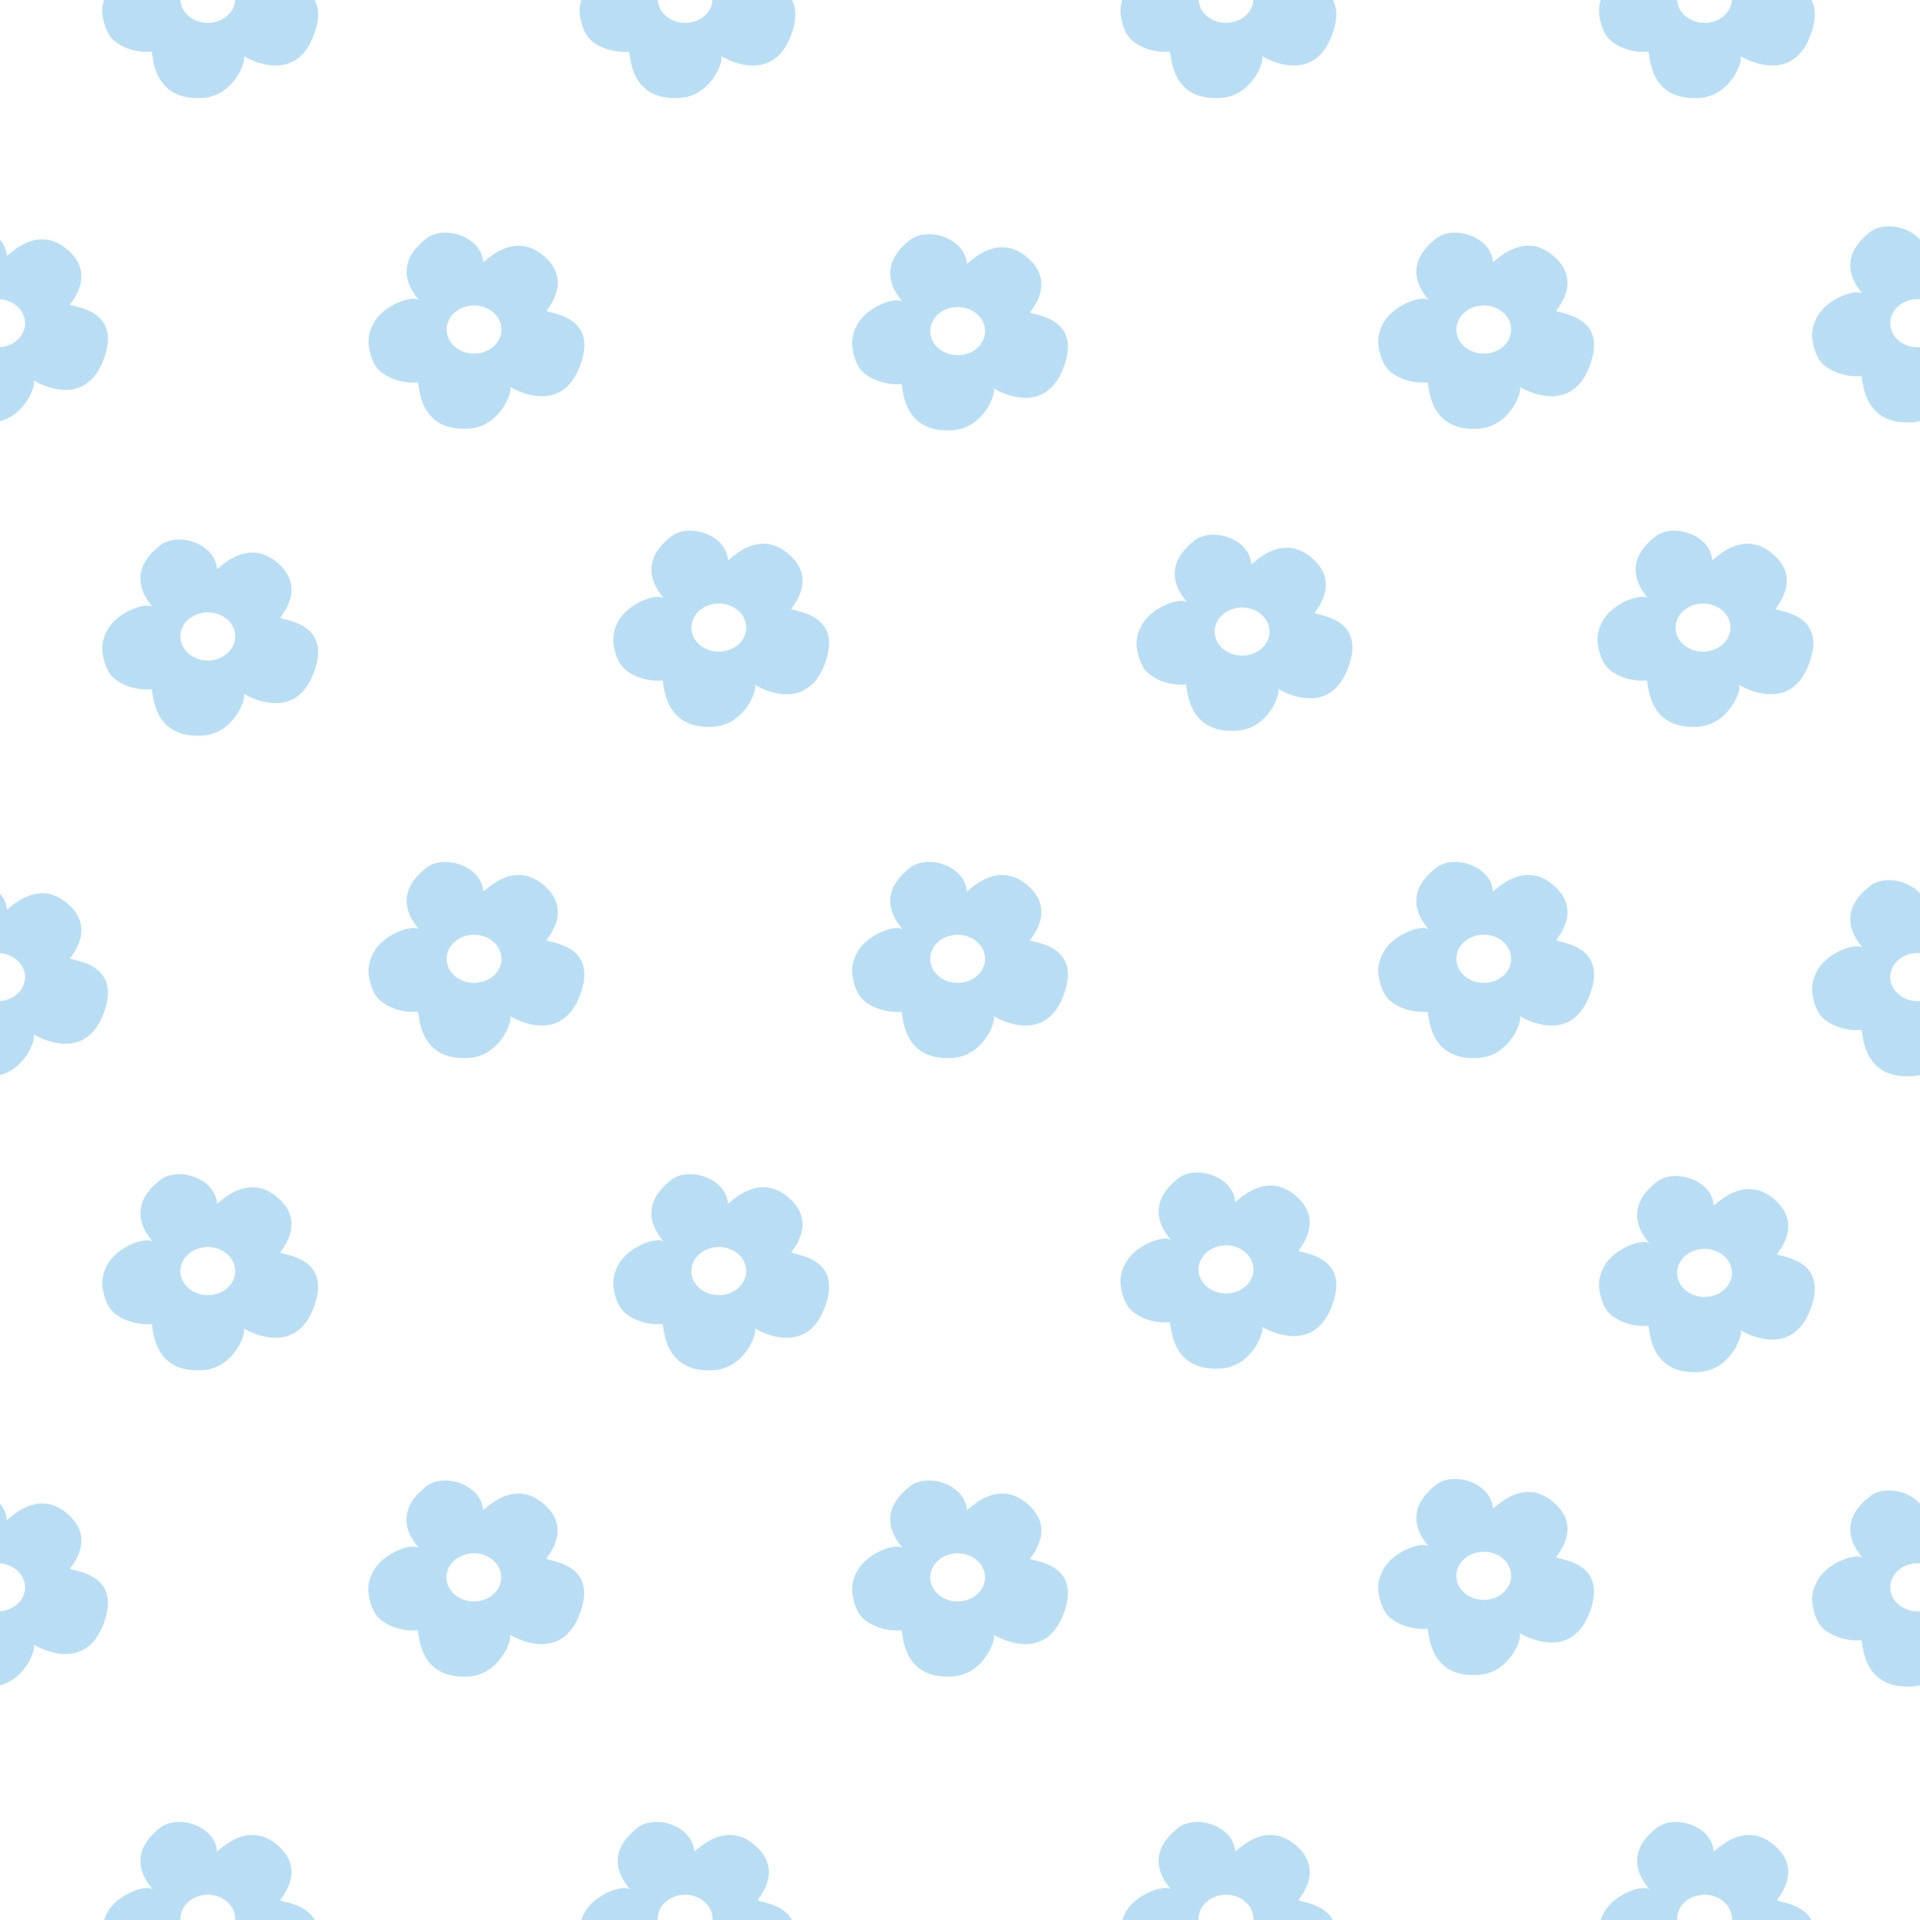 100+] Blue Flower Wallpapers | Wallpapers.com